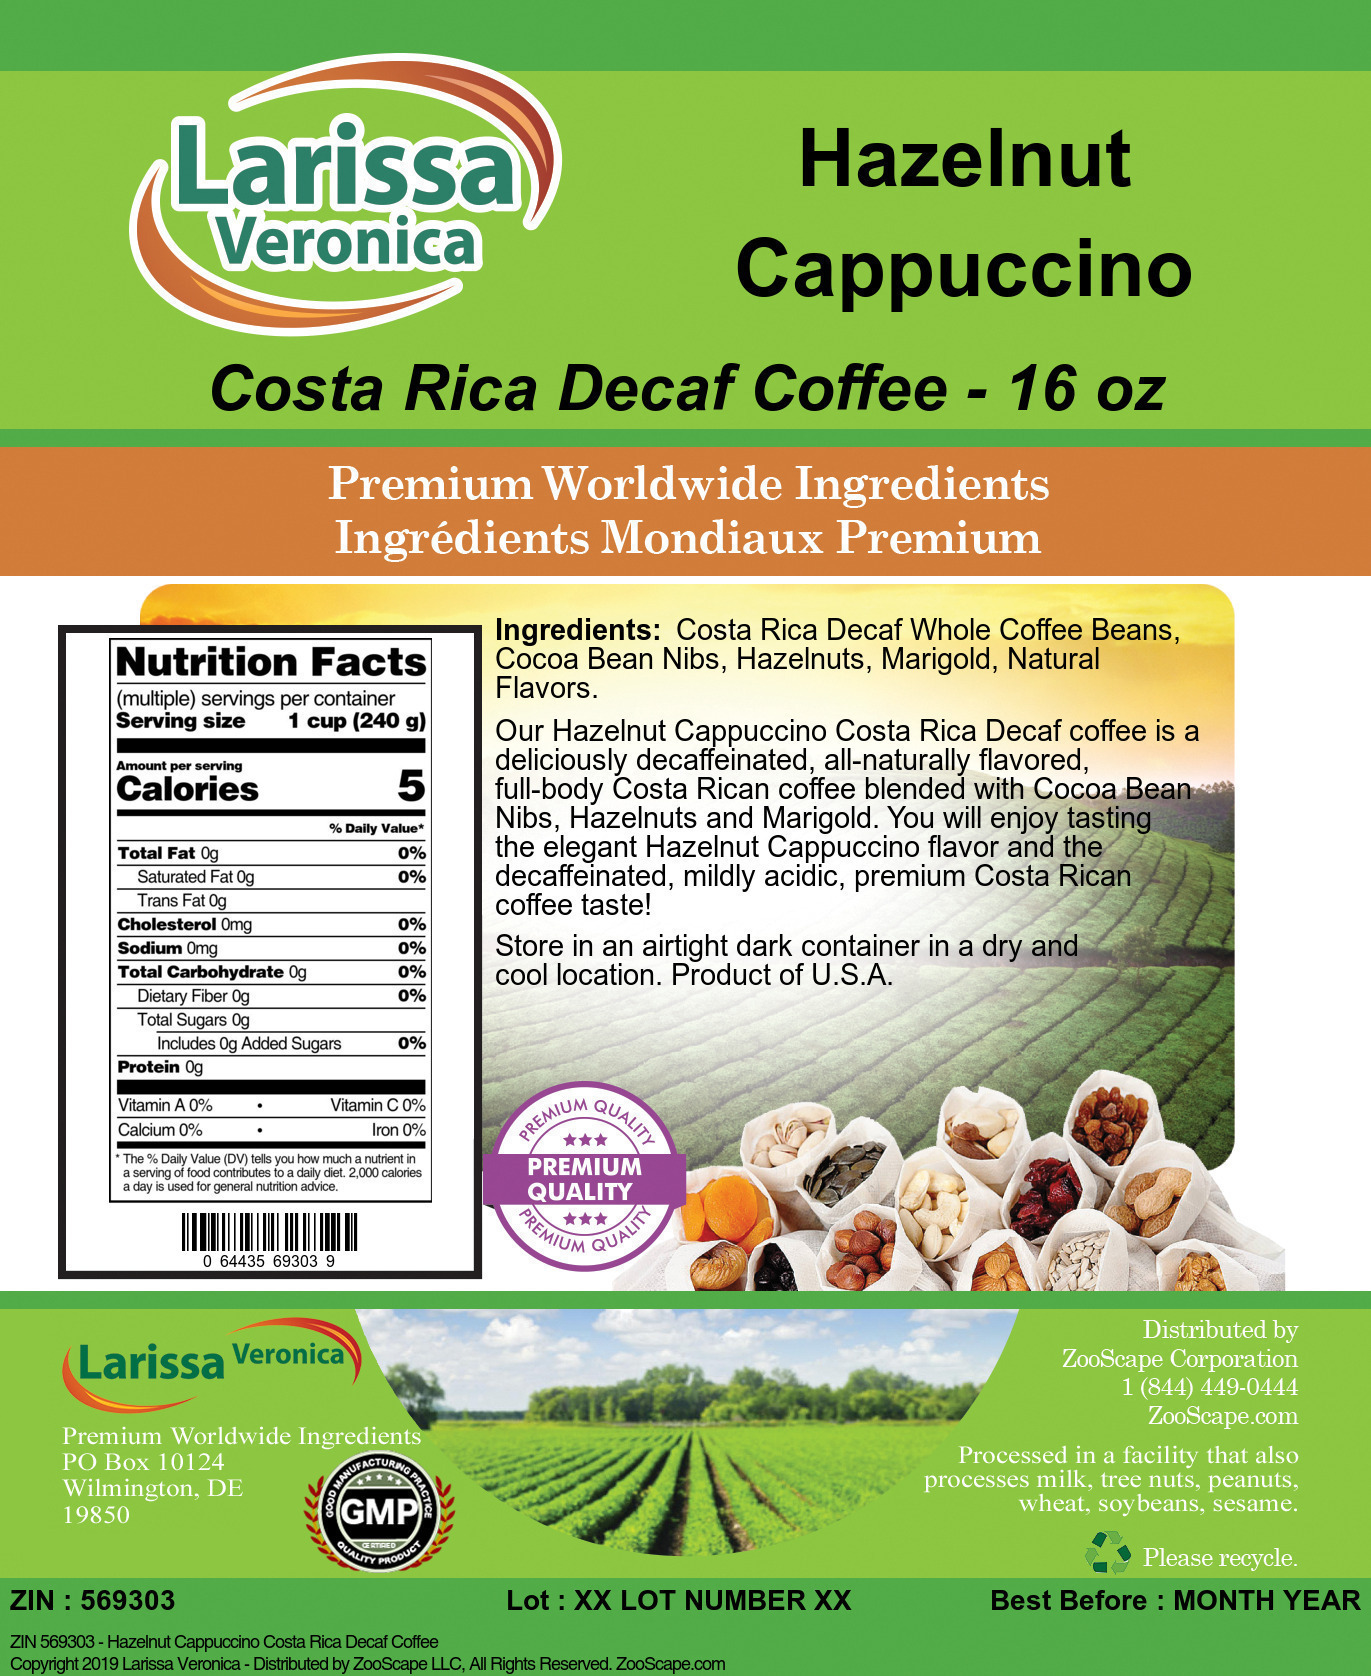 Hazelnut Cappuccino Costa Rica Decaf Coffee - Label